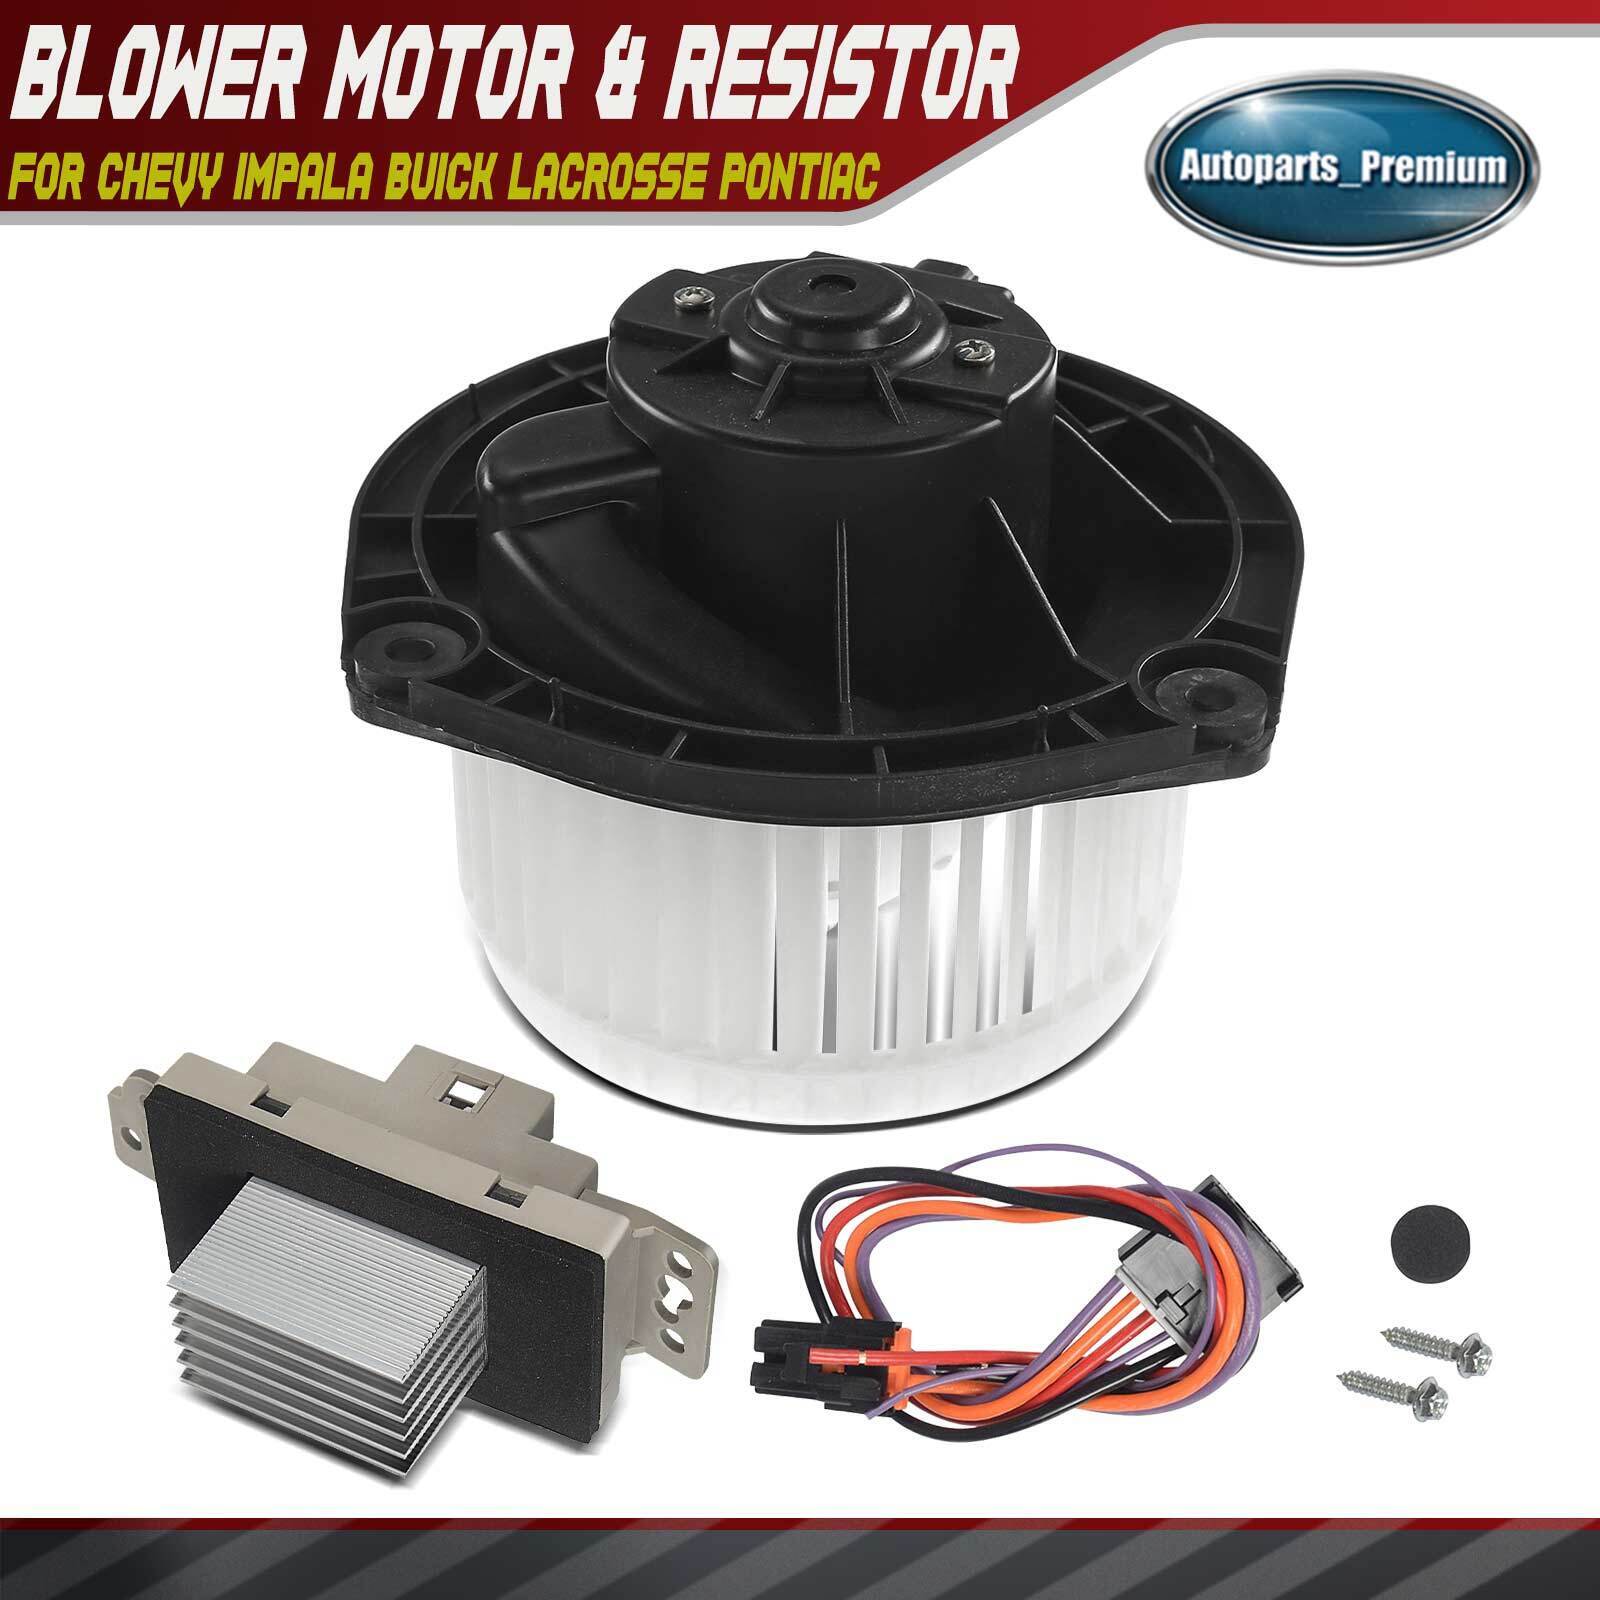 HVAC Heater Blower Motor & Resistor Kit for Chevy Impala Buick LaCrosse Pontiac